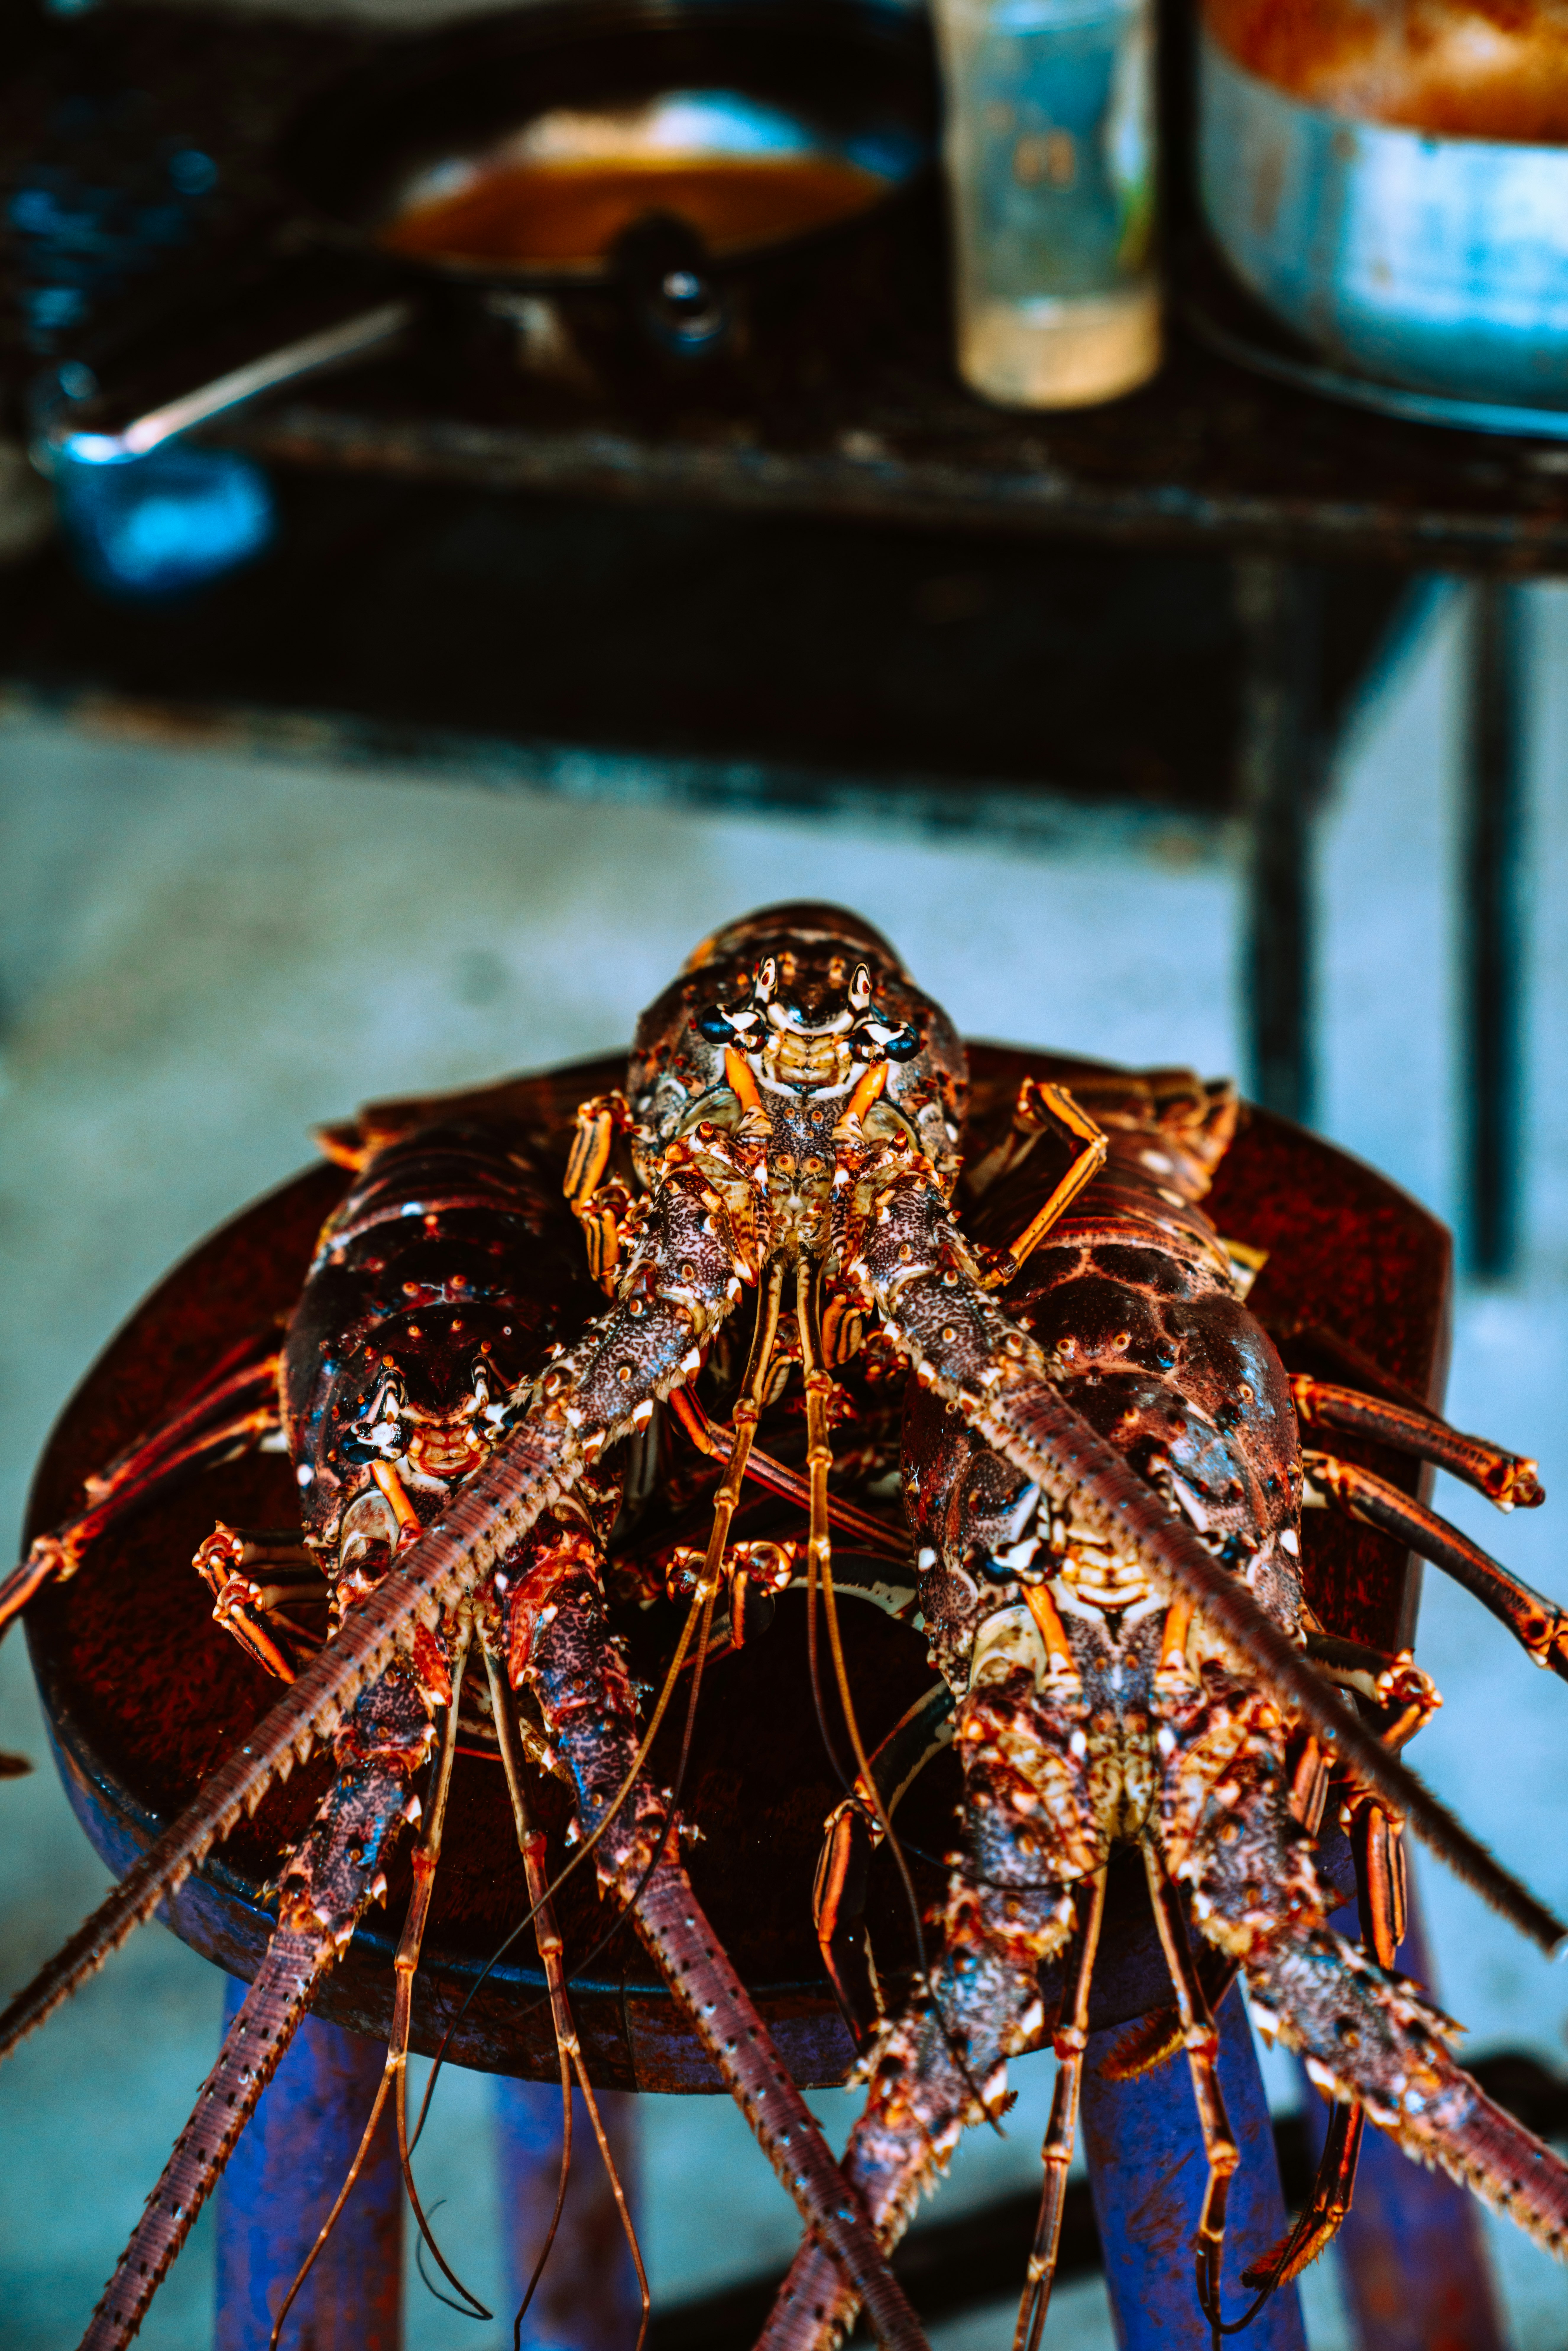 Caribbean spiny lobsters (Panulirus argus)